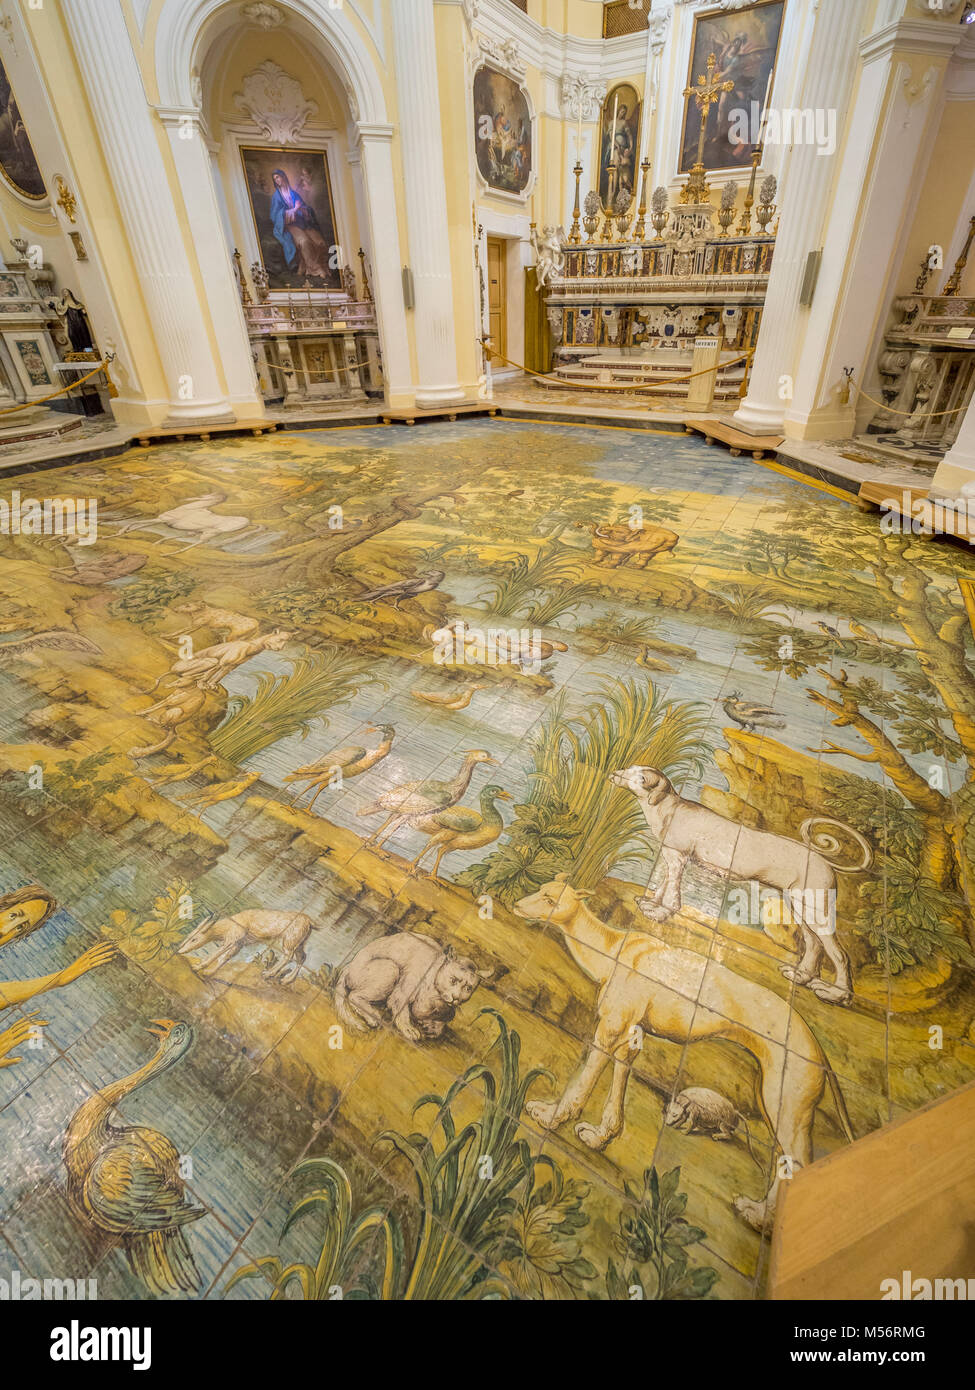 Interior of THE SAINT MICHAEL CHURCH in Anacapri, The mosaic floor by Leonardo Chiaiese. Stock Photo